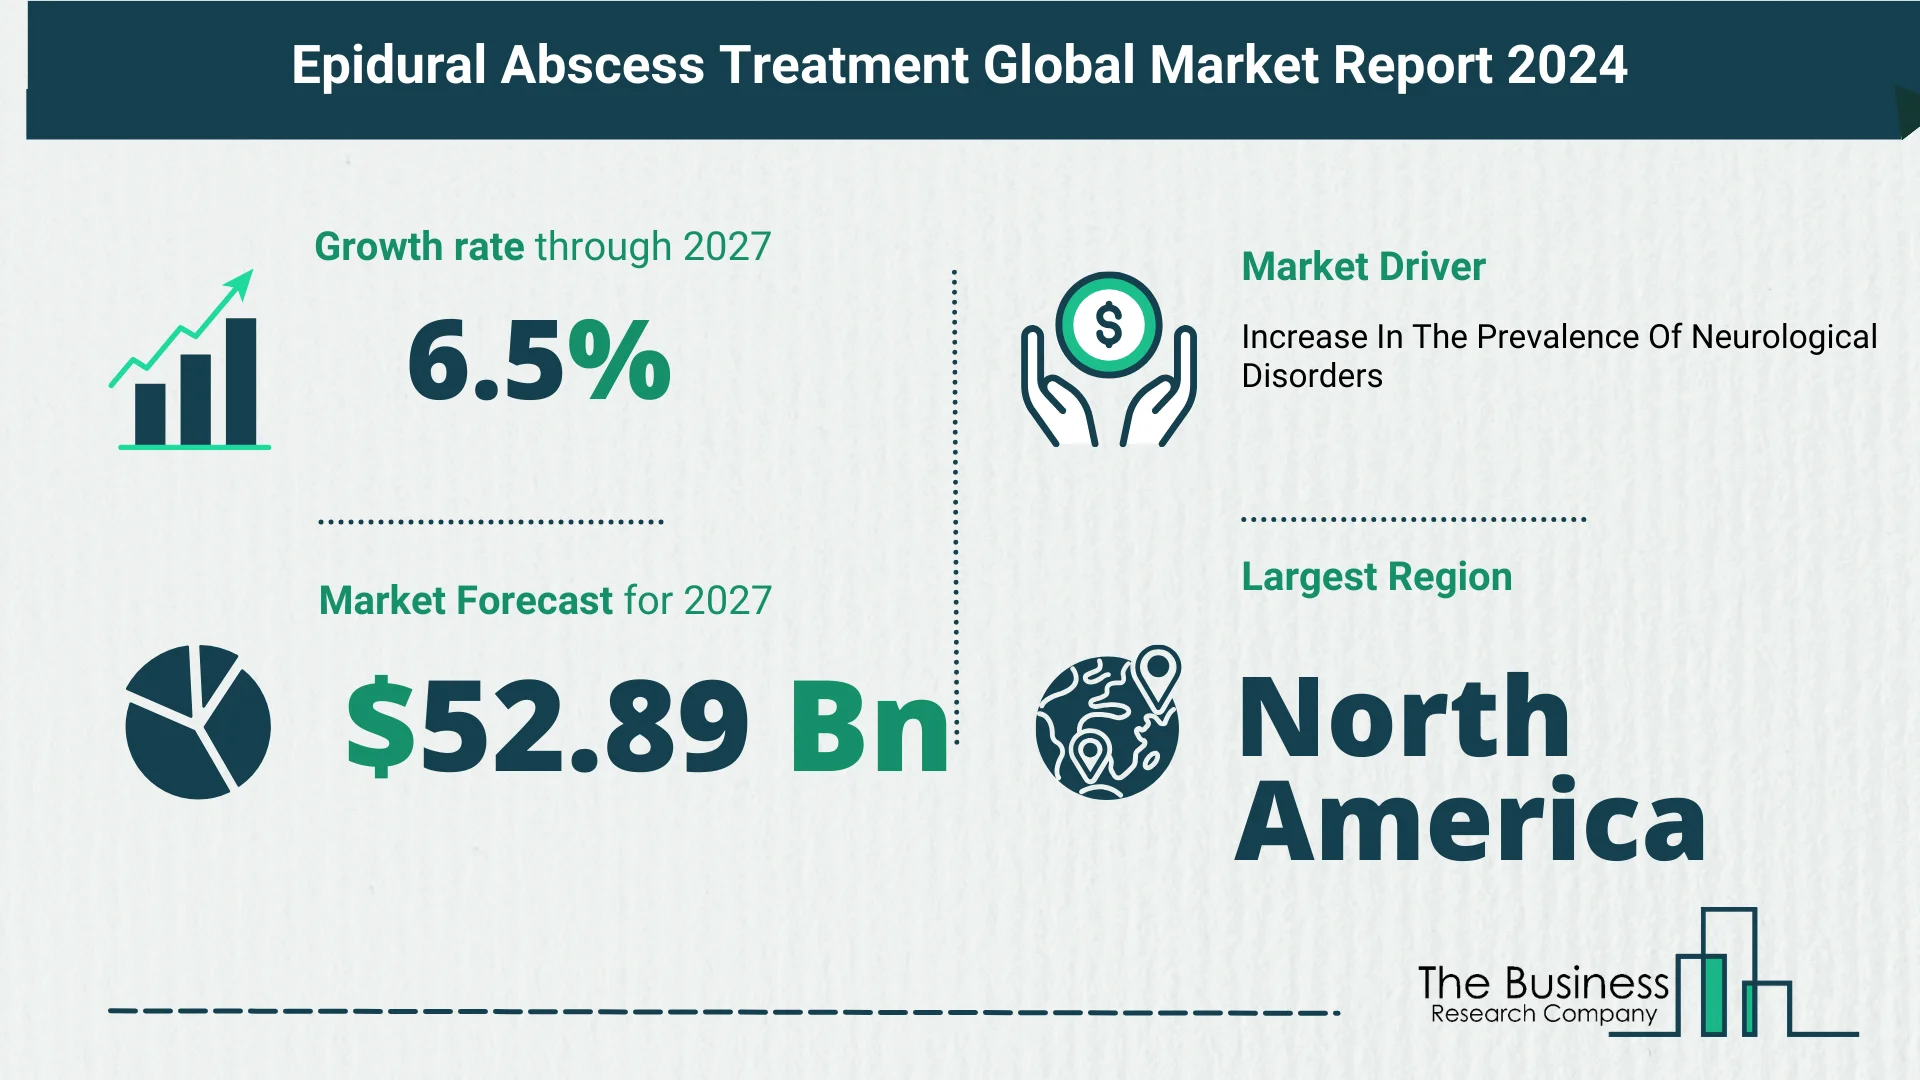 Global Epidural Abscess Treatment Market Size